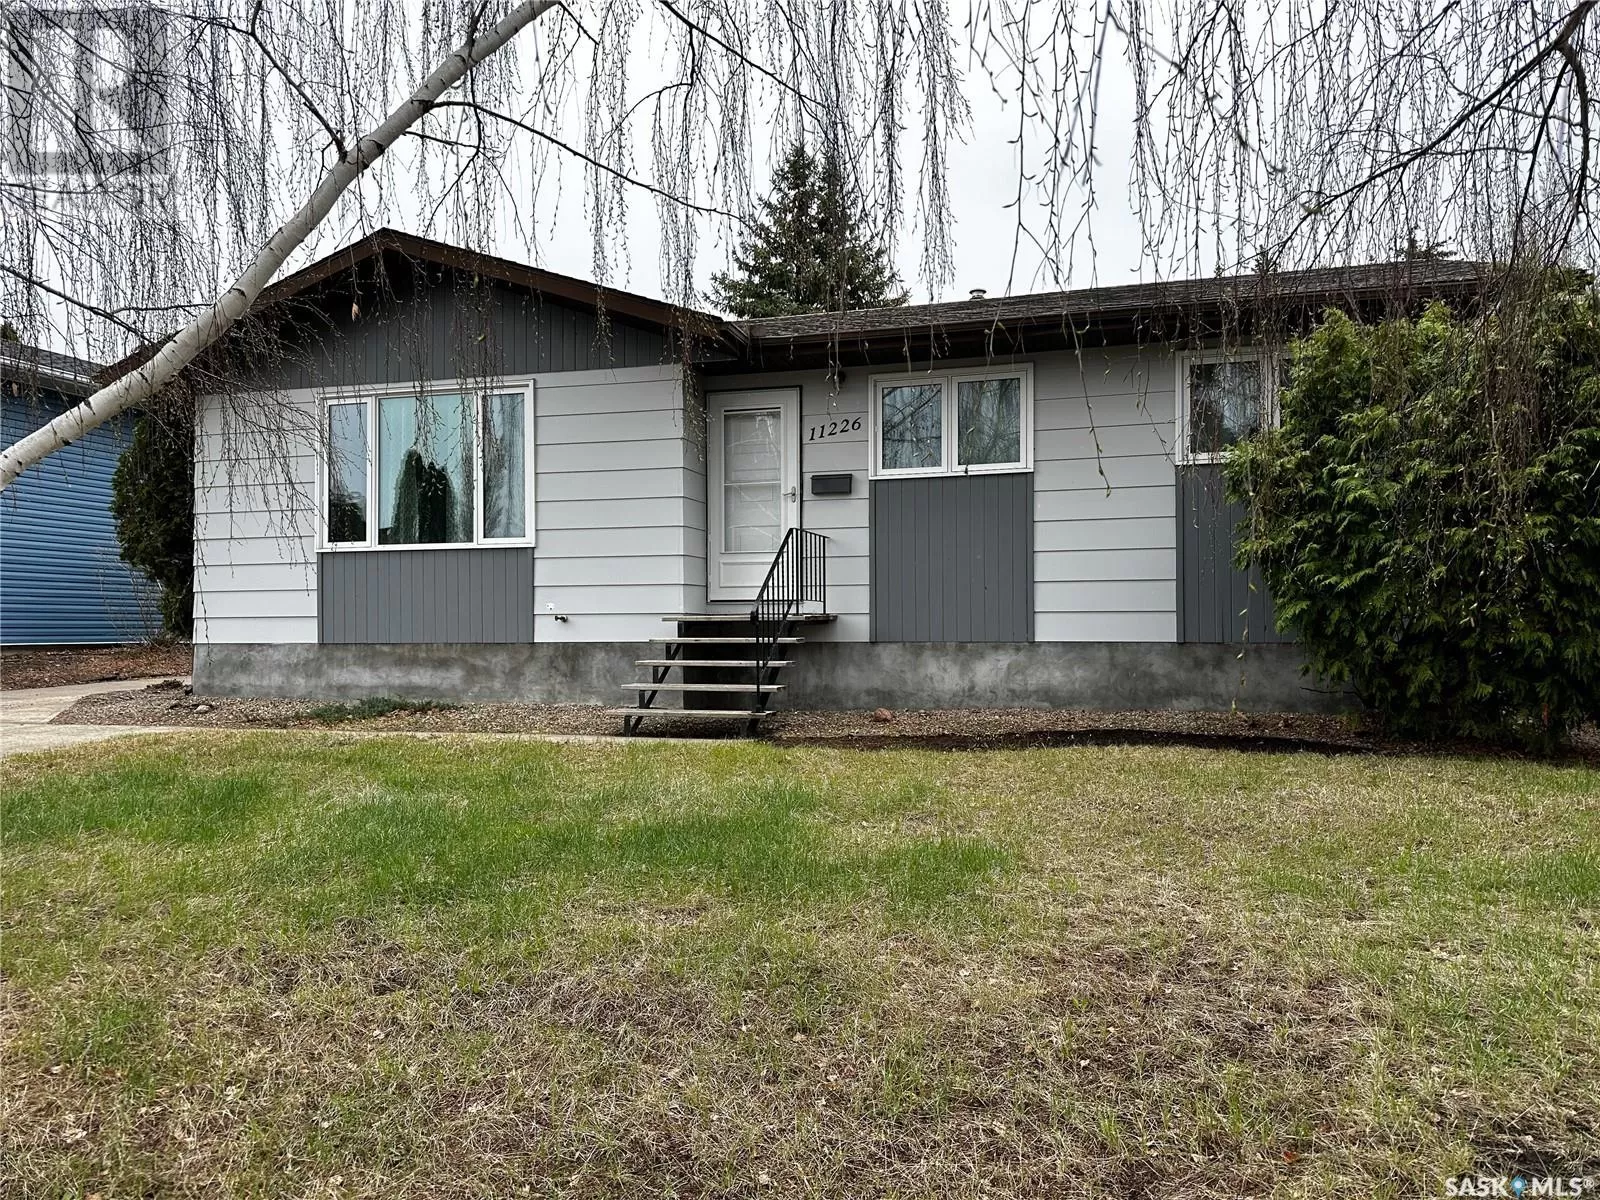 House for rent: 11226 Gardiner Drive, North Battleford, Saskatchewan S9A 3M6